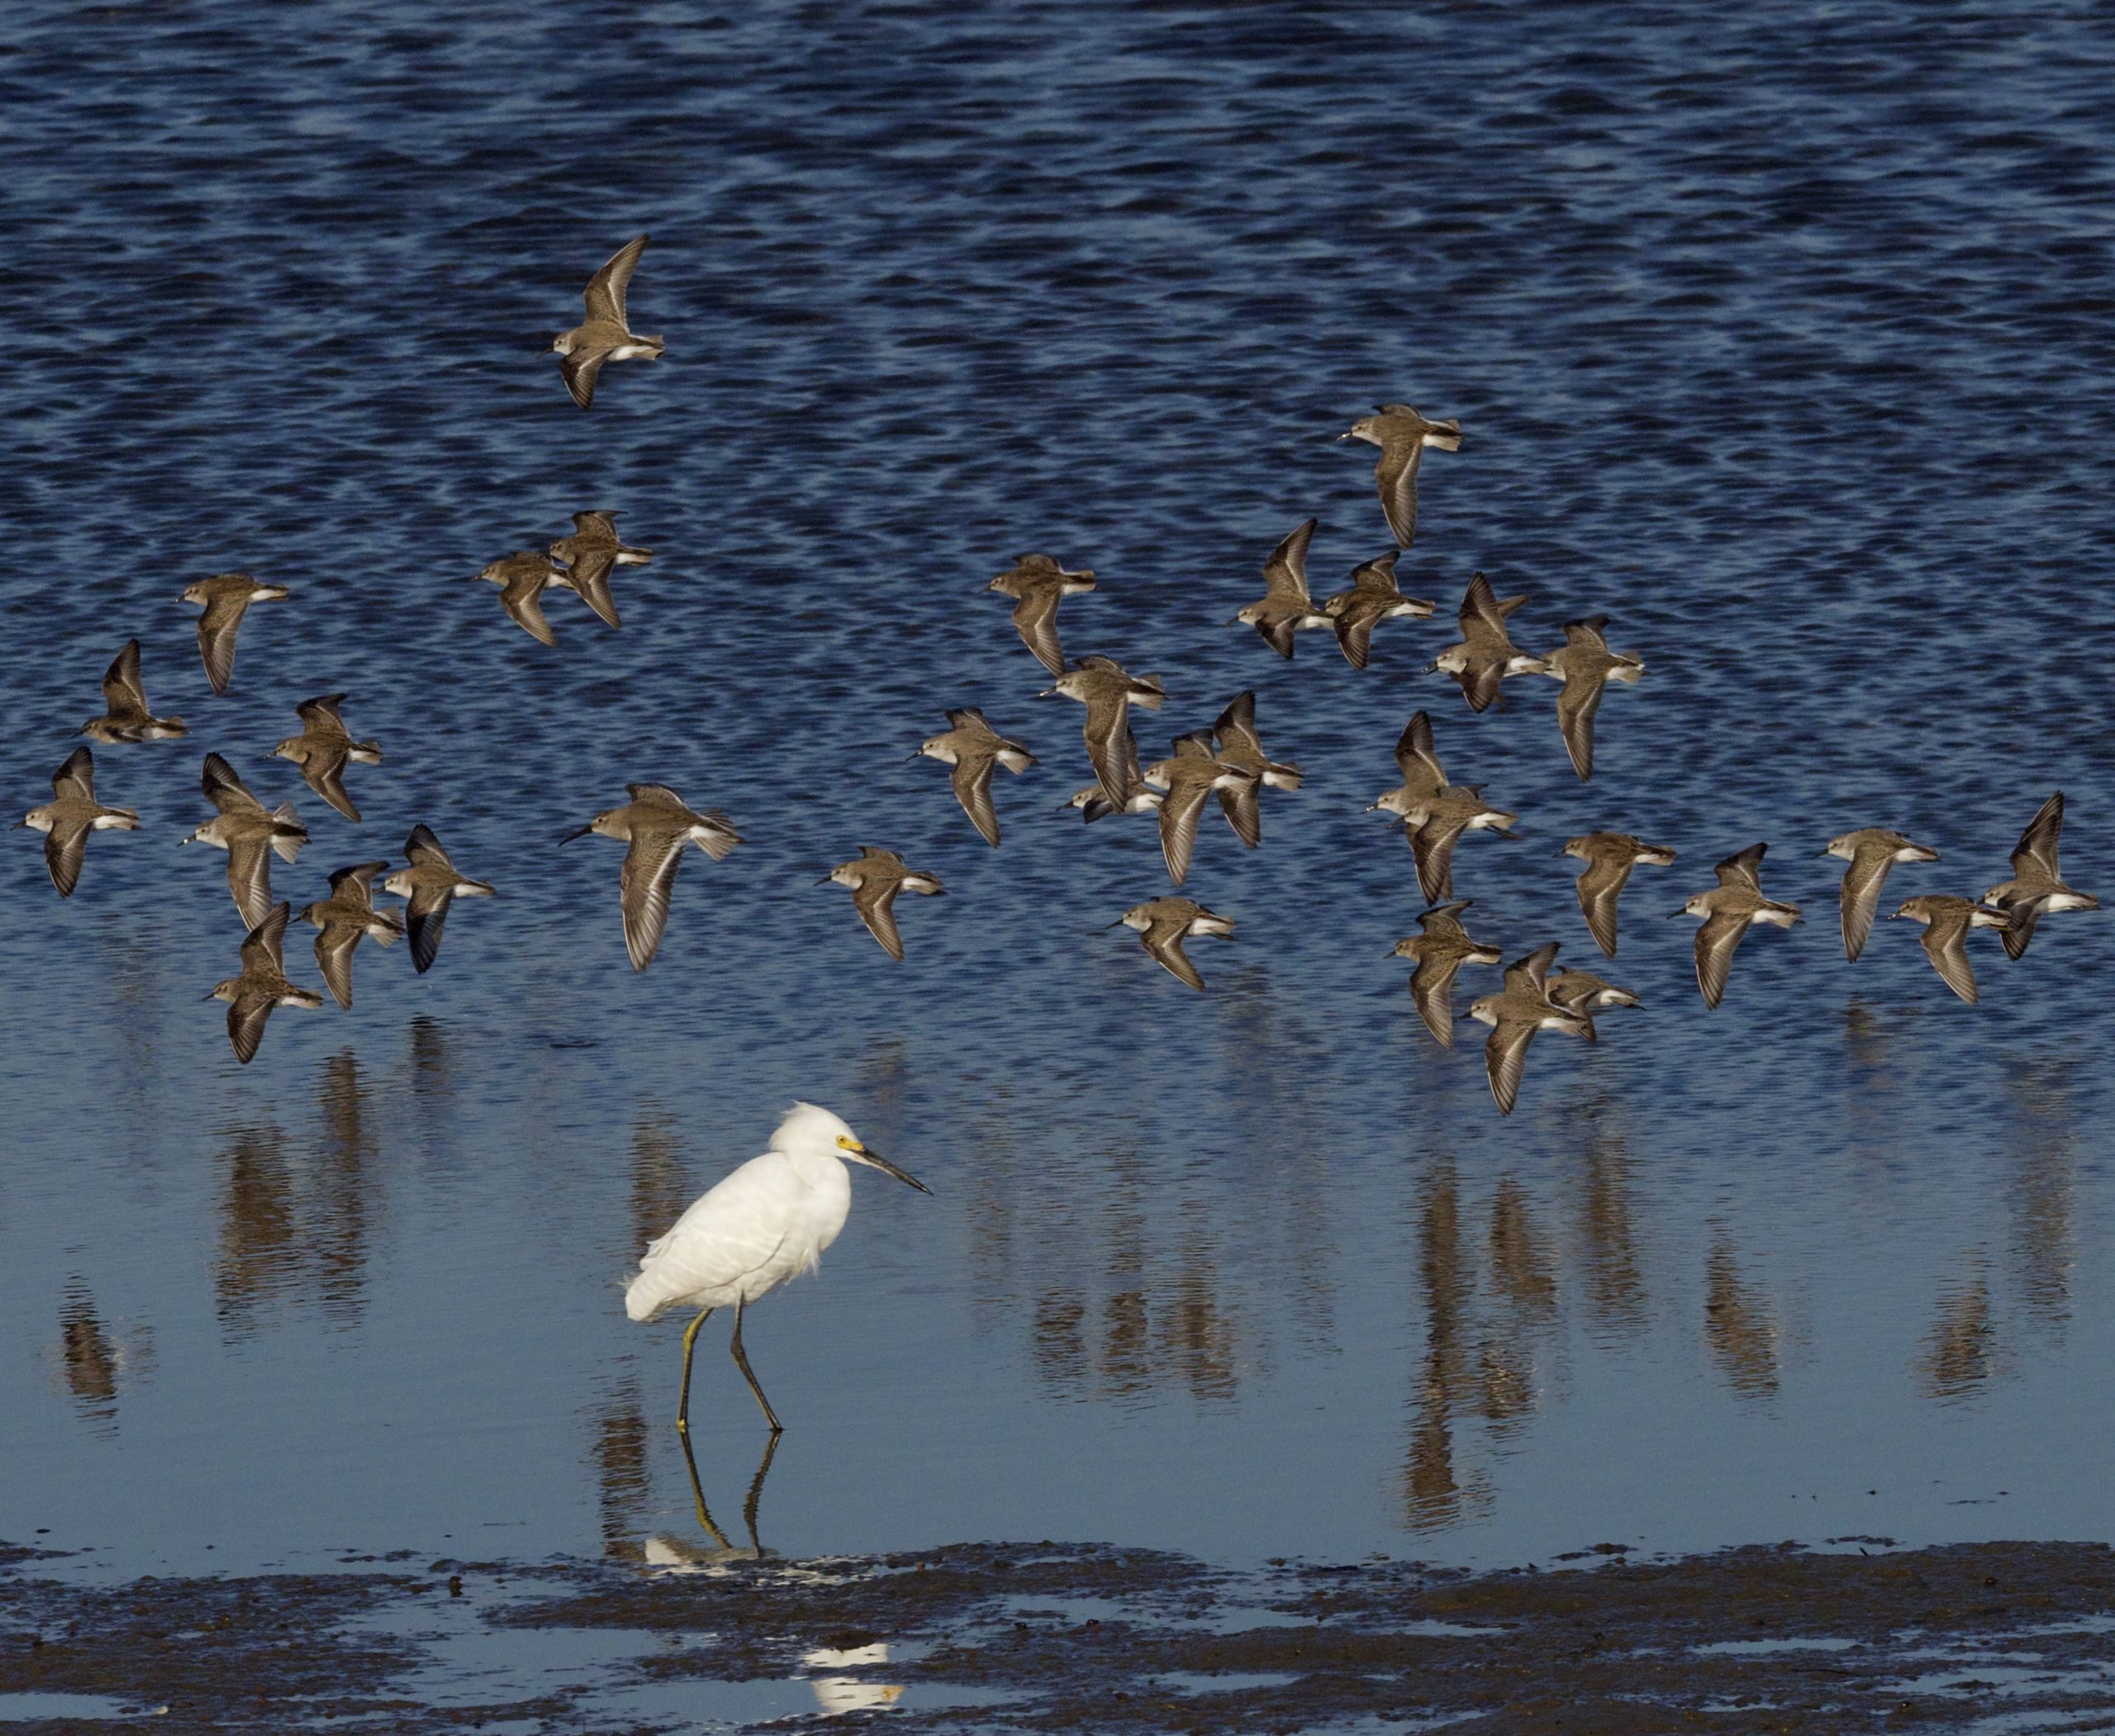 Shorebird migration in California